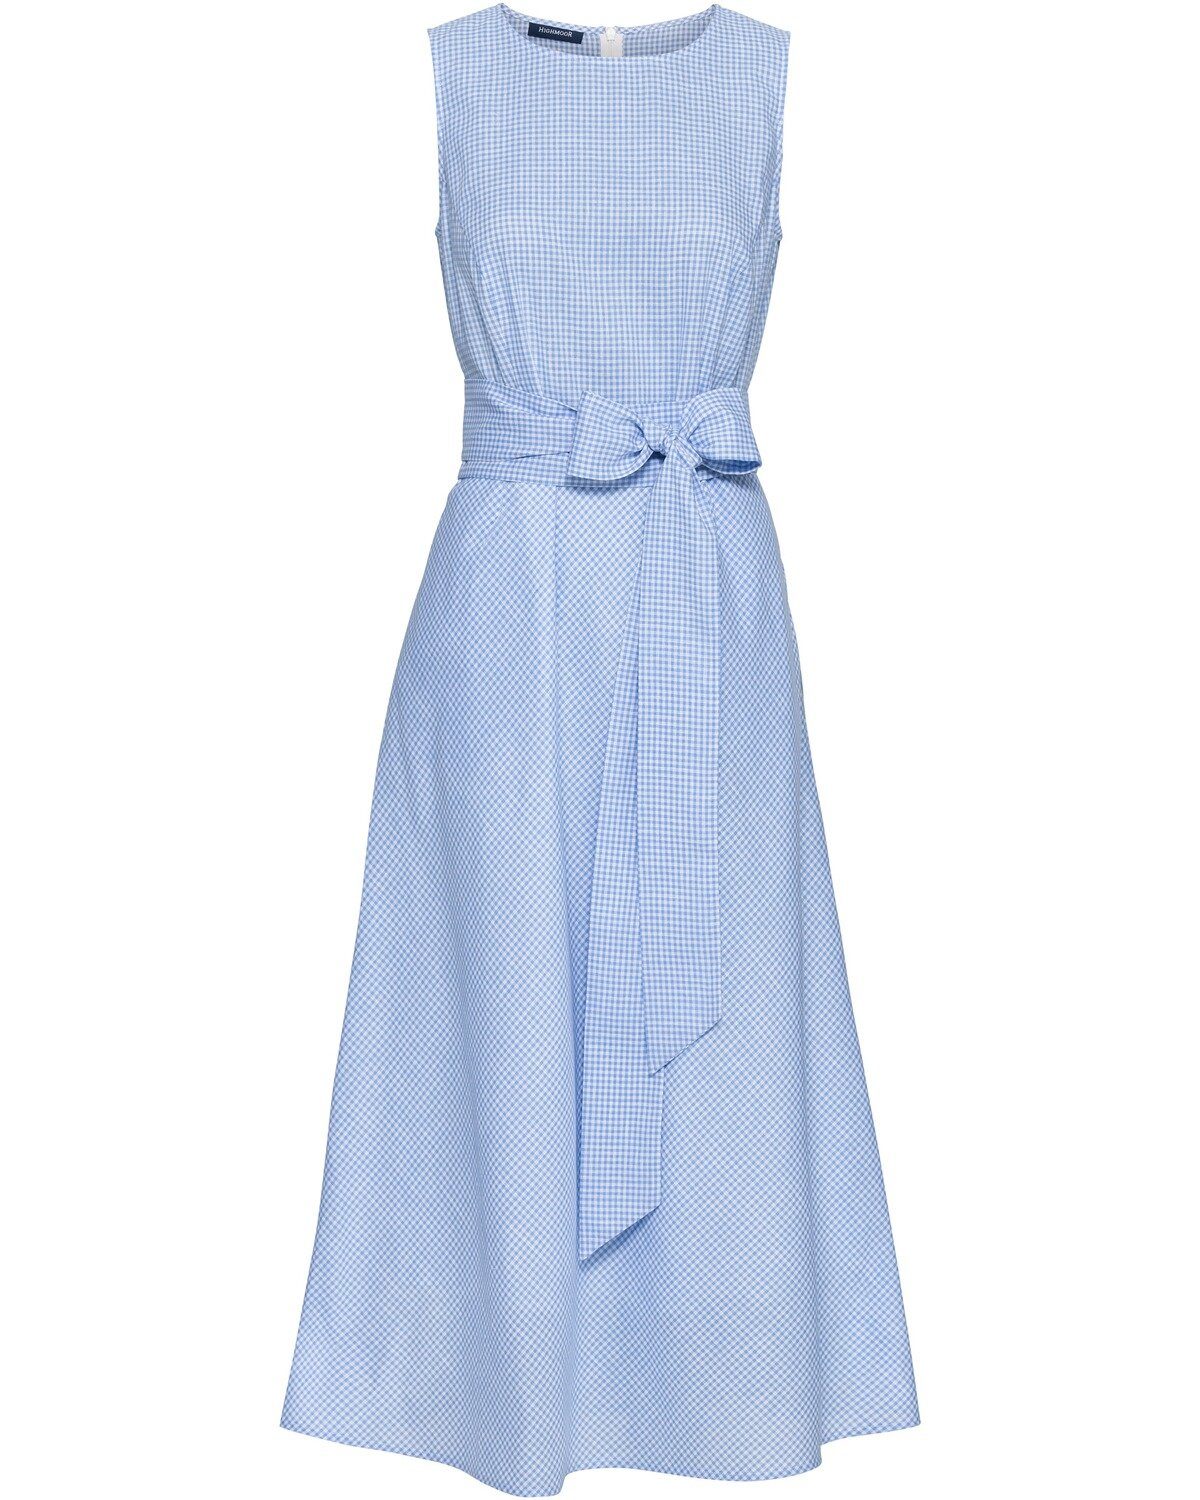 Damen Kleider Highmoor Wickelkleid Vichykarokleid